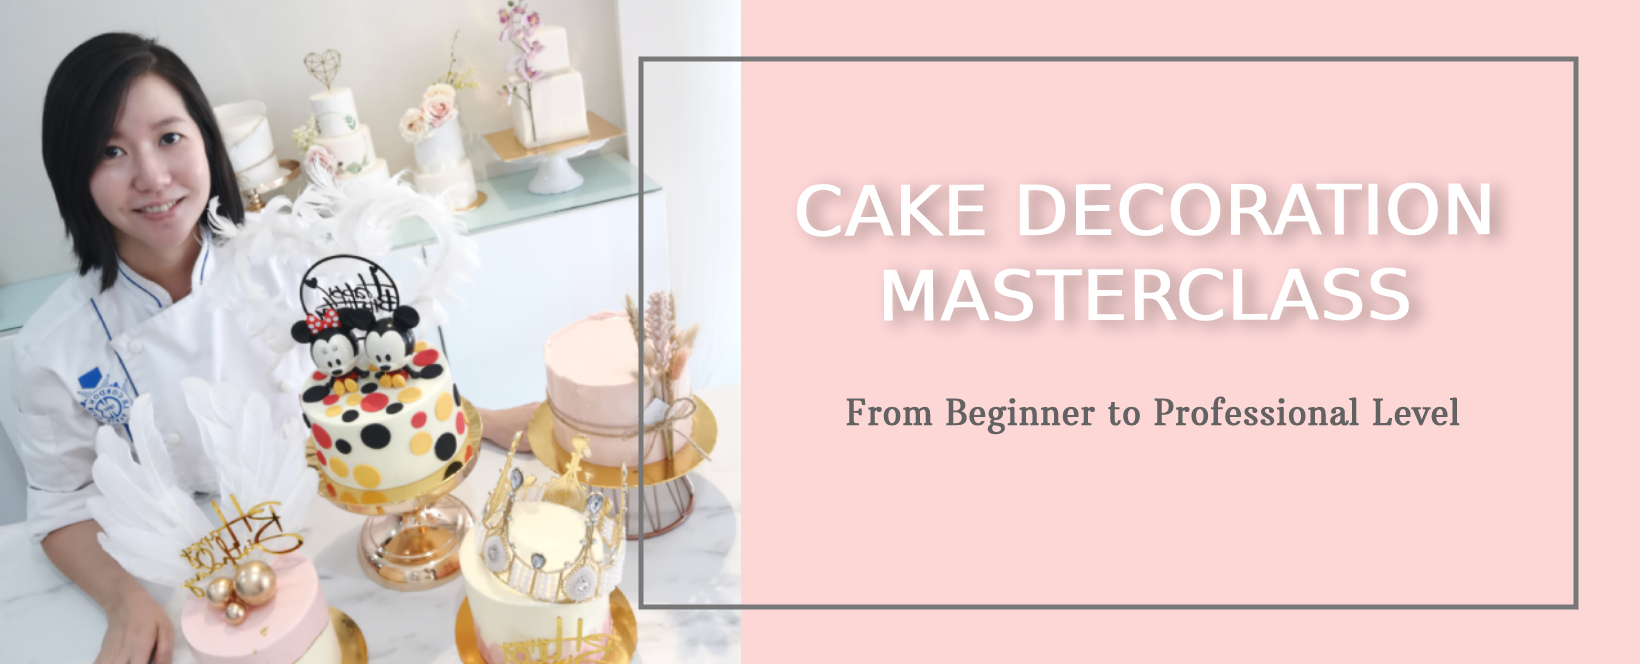 Mastering cake decoration banner (1).jpg